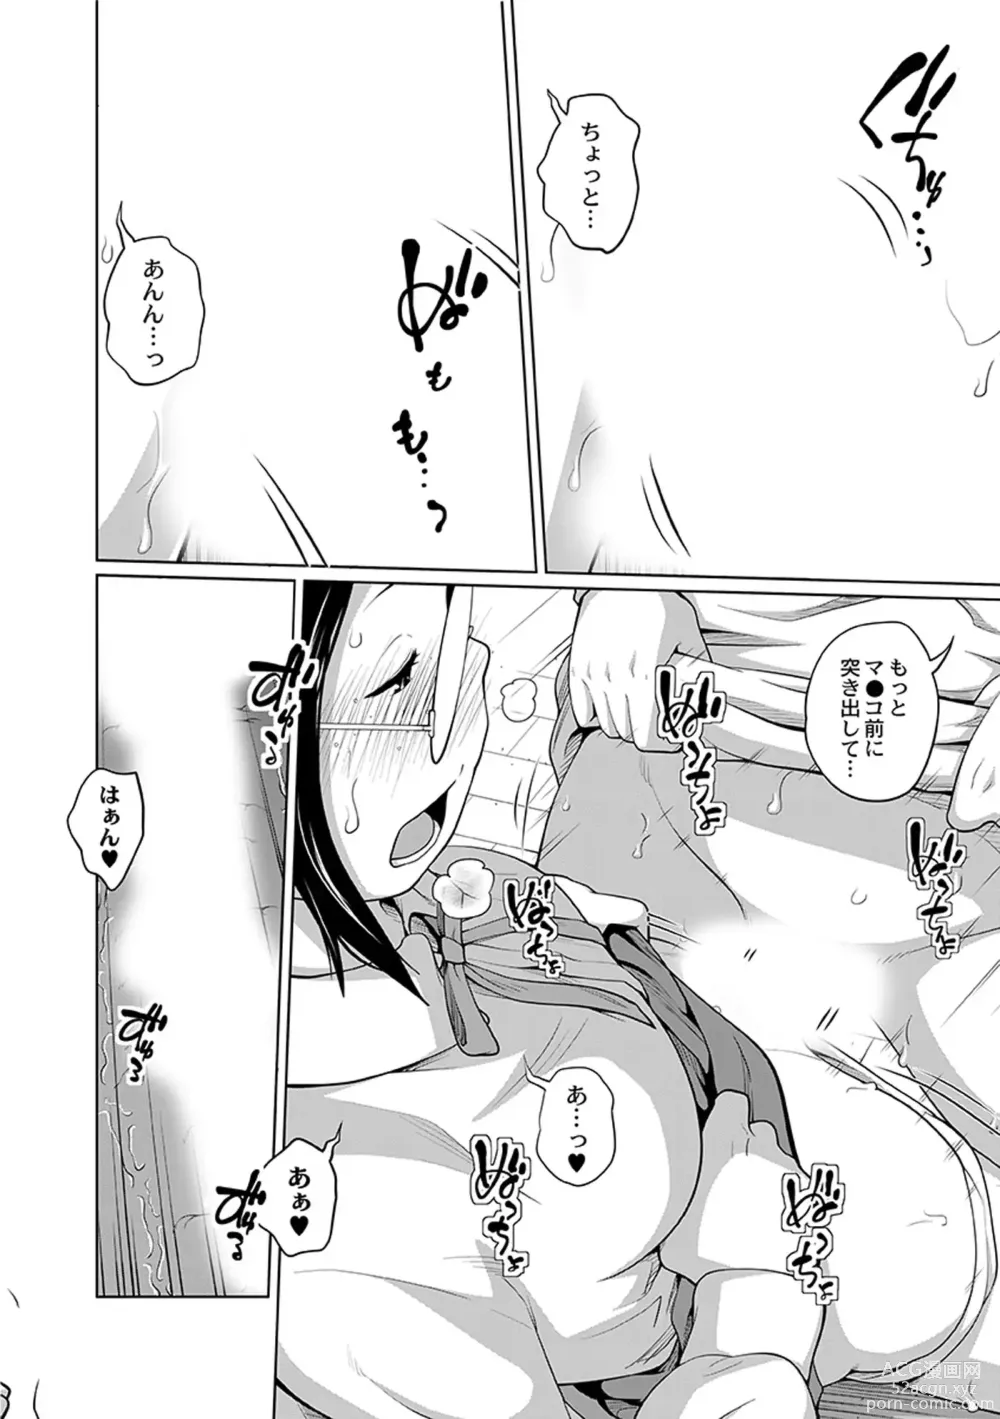 Page 26 of manga Ane Megane - spectacled sister